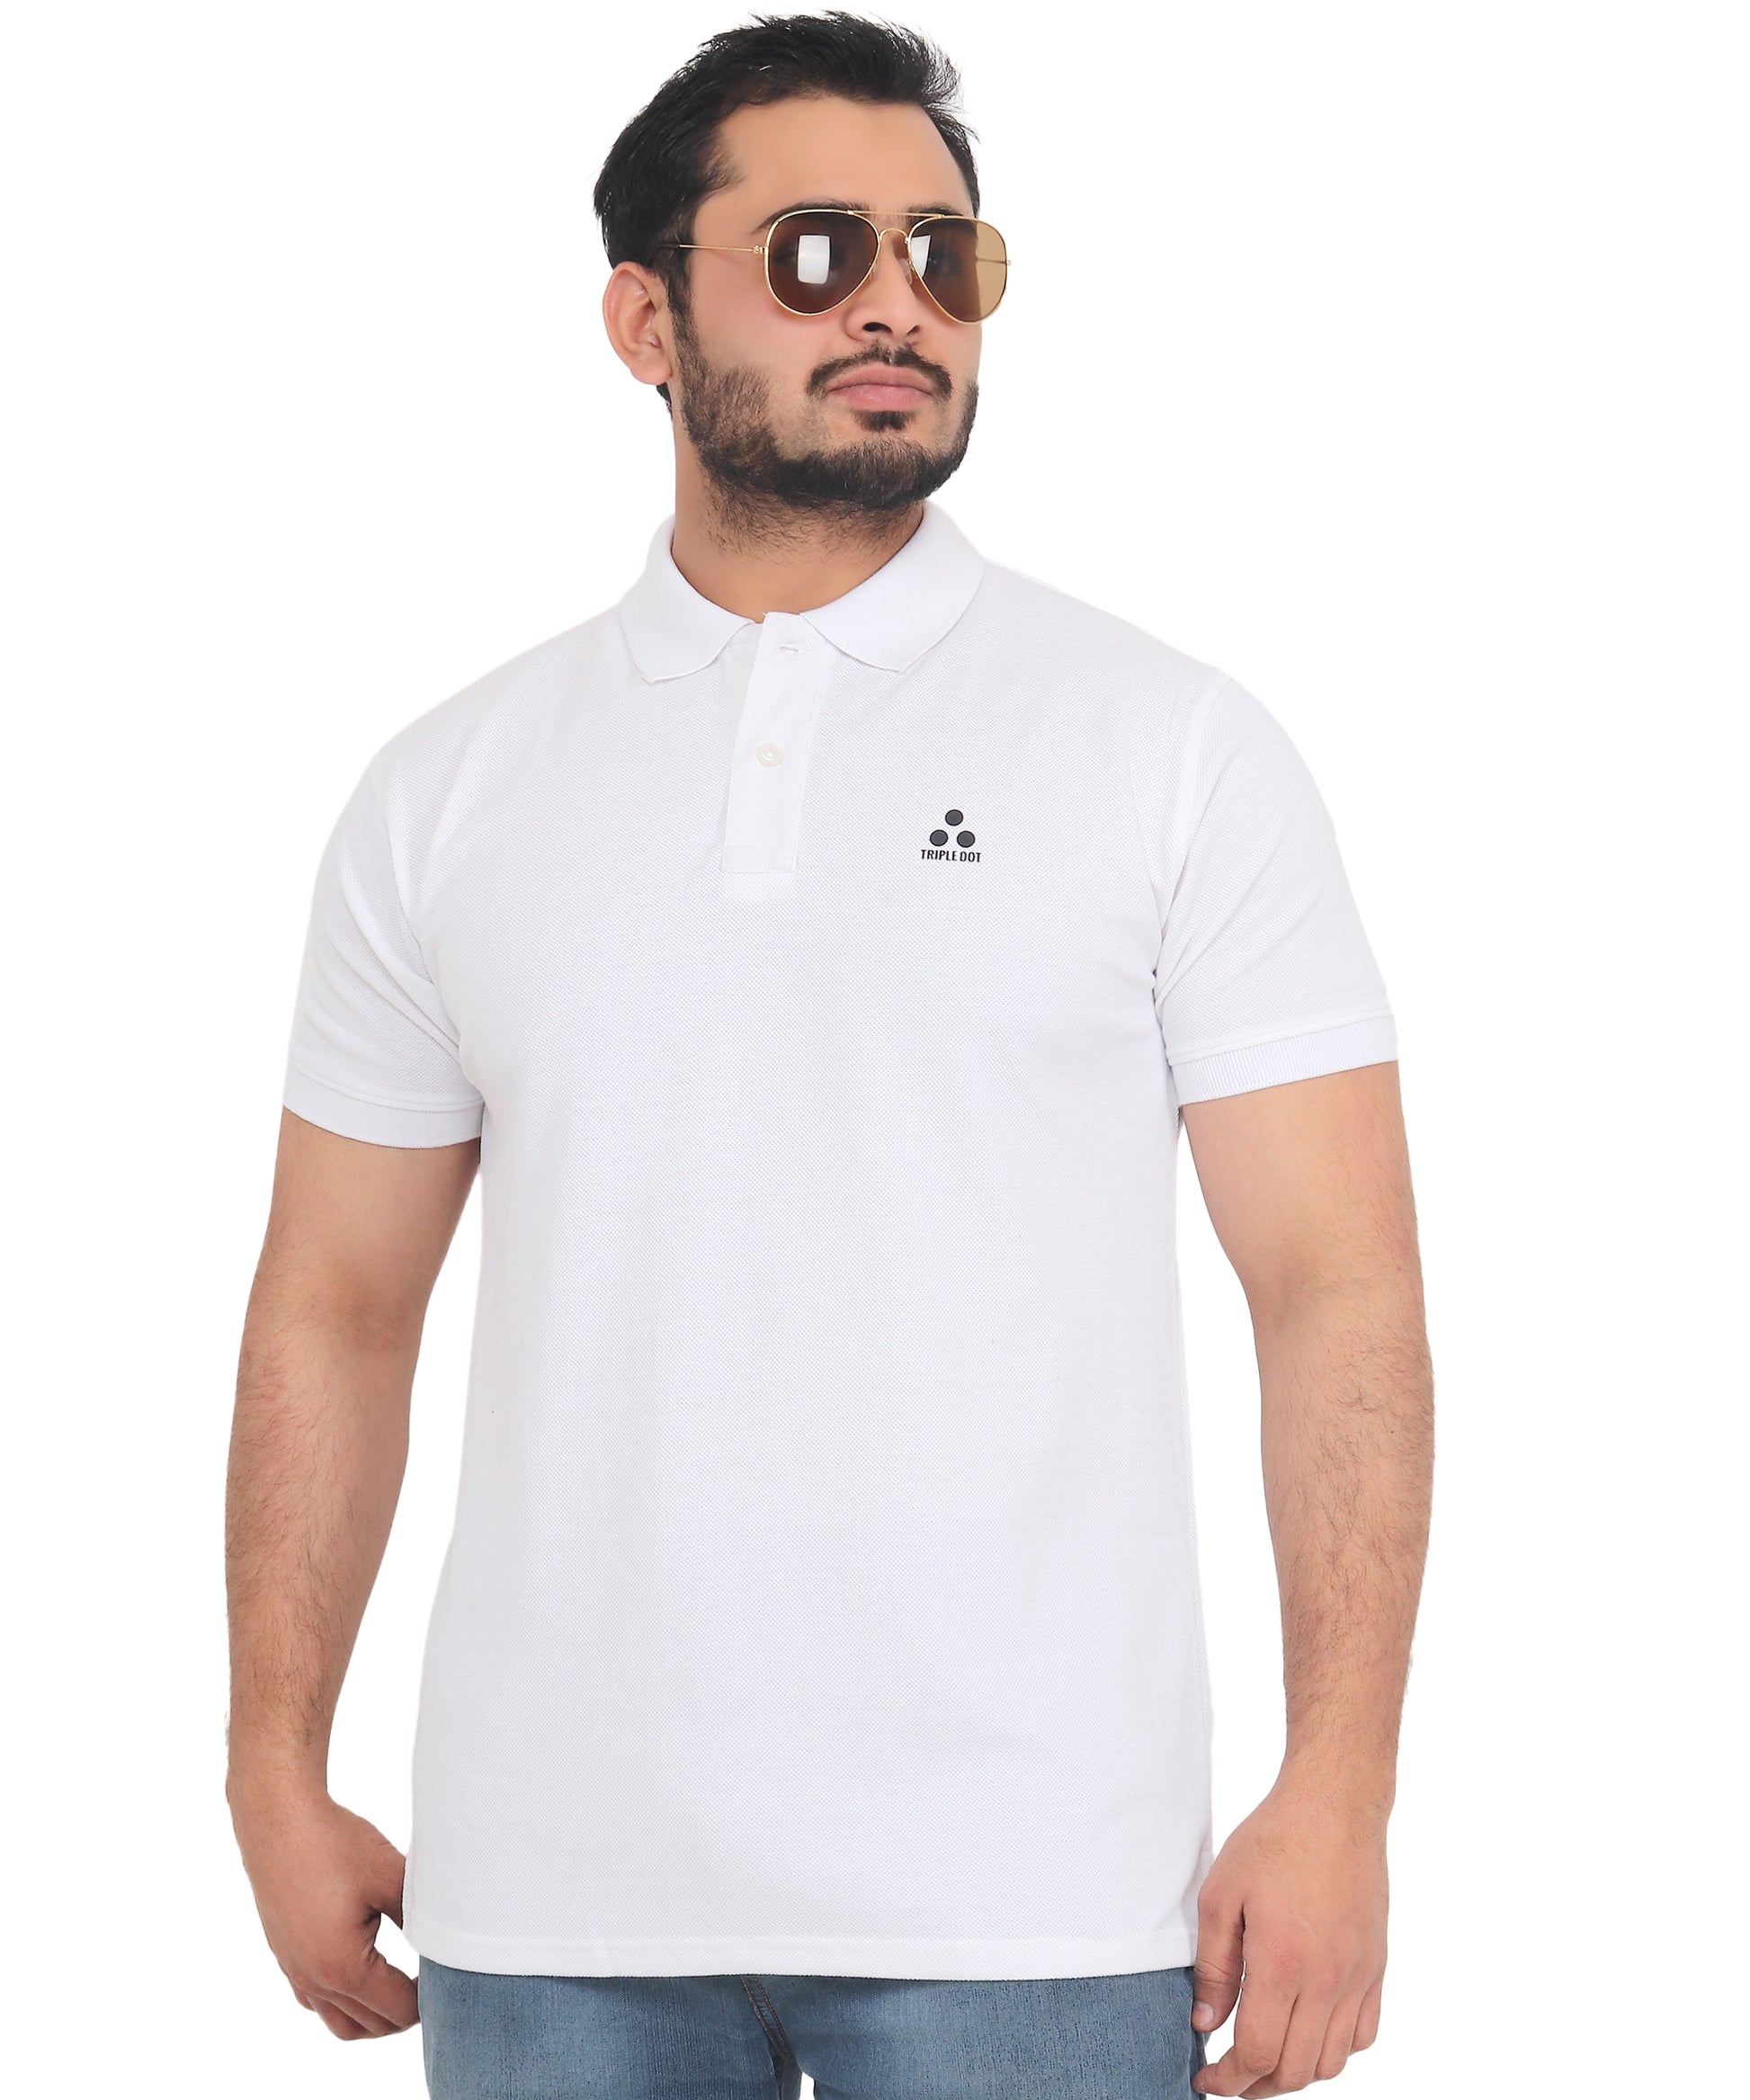 Solid White Poly Cotton Regular Fit Men's T-Shirt - Triple Dot Clothings